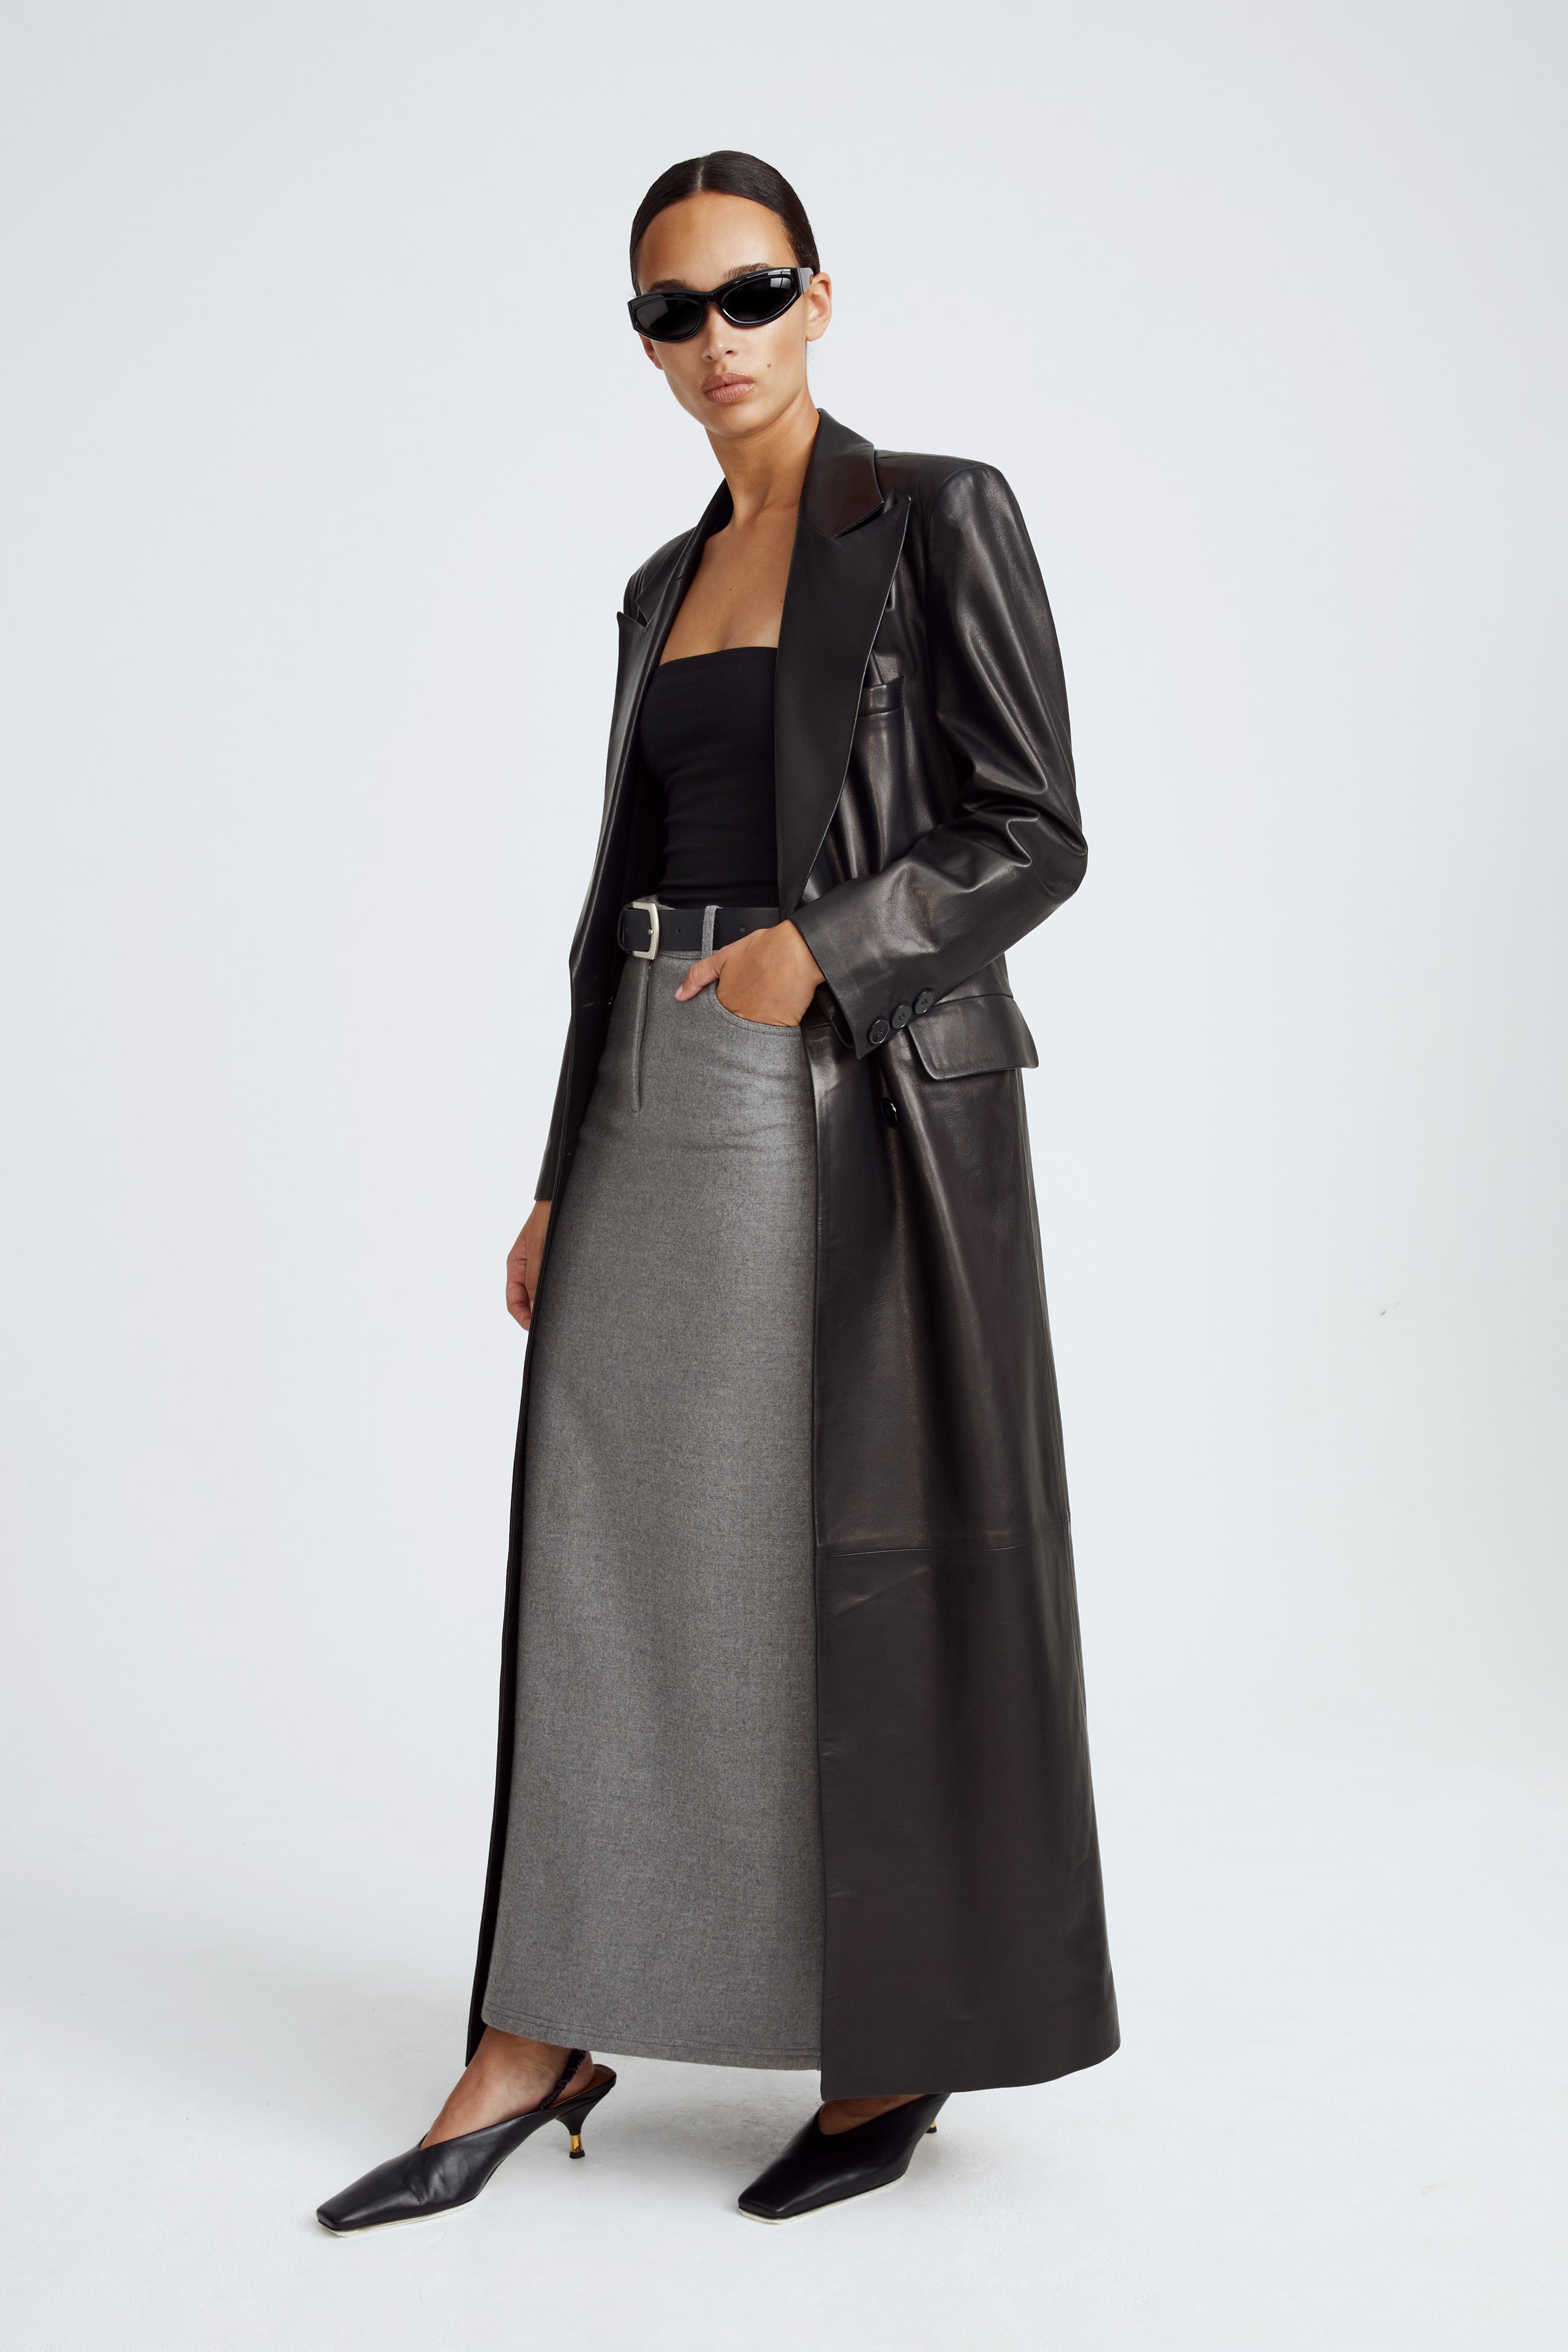 Model is wearing the Misha Black Long Leather Coat Side